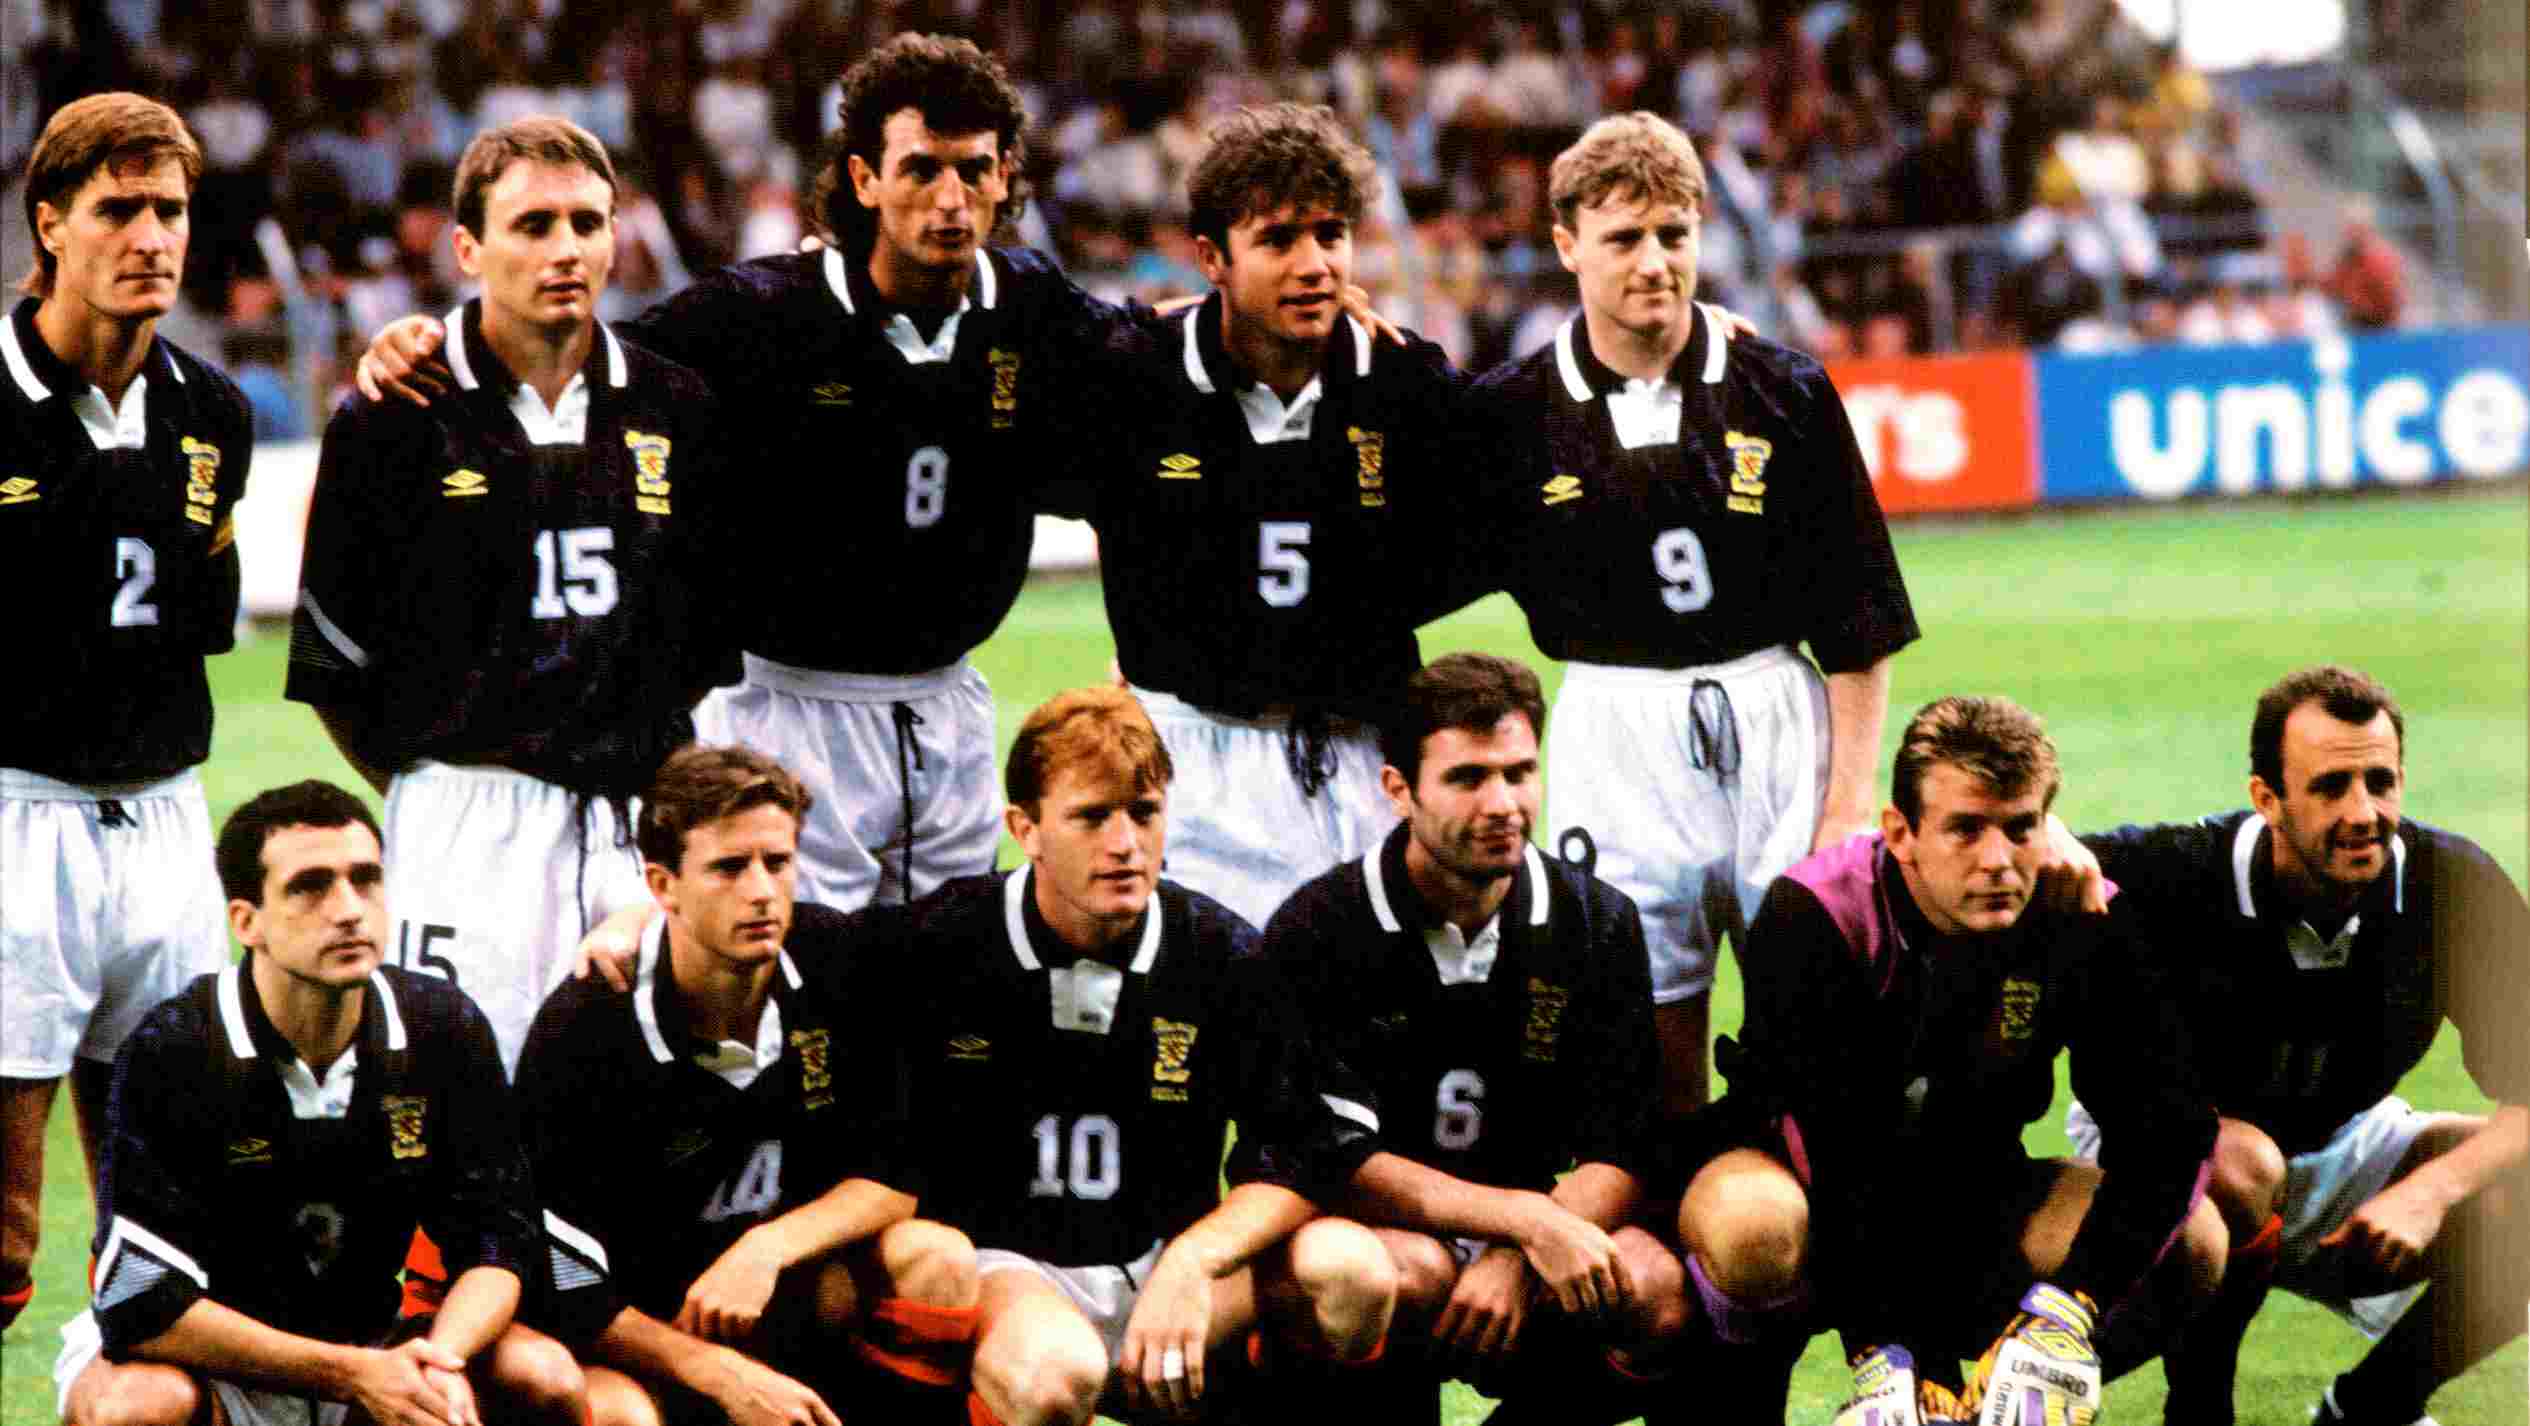 Scotland's team against CIS. Back row (l to r): Richard Gough, Tom Boyd, Dave McPherson, Ally McCoist, Stuart McKimmie. Front row (l to r): Paul McStay, Kevin Gallacher, Stuart McCall, Brian McClair, Andy Goram, Gary McAllister